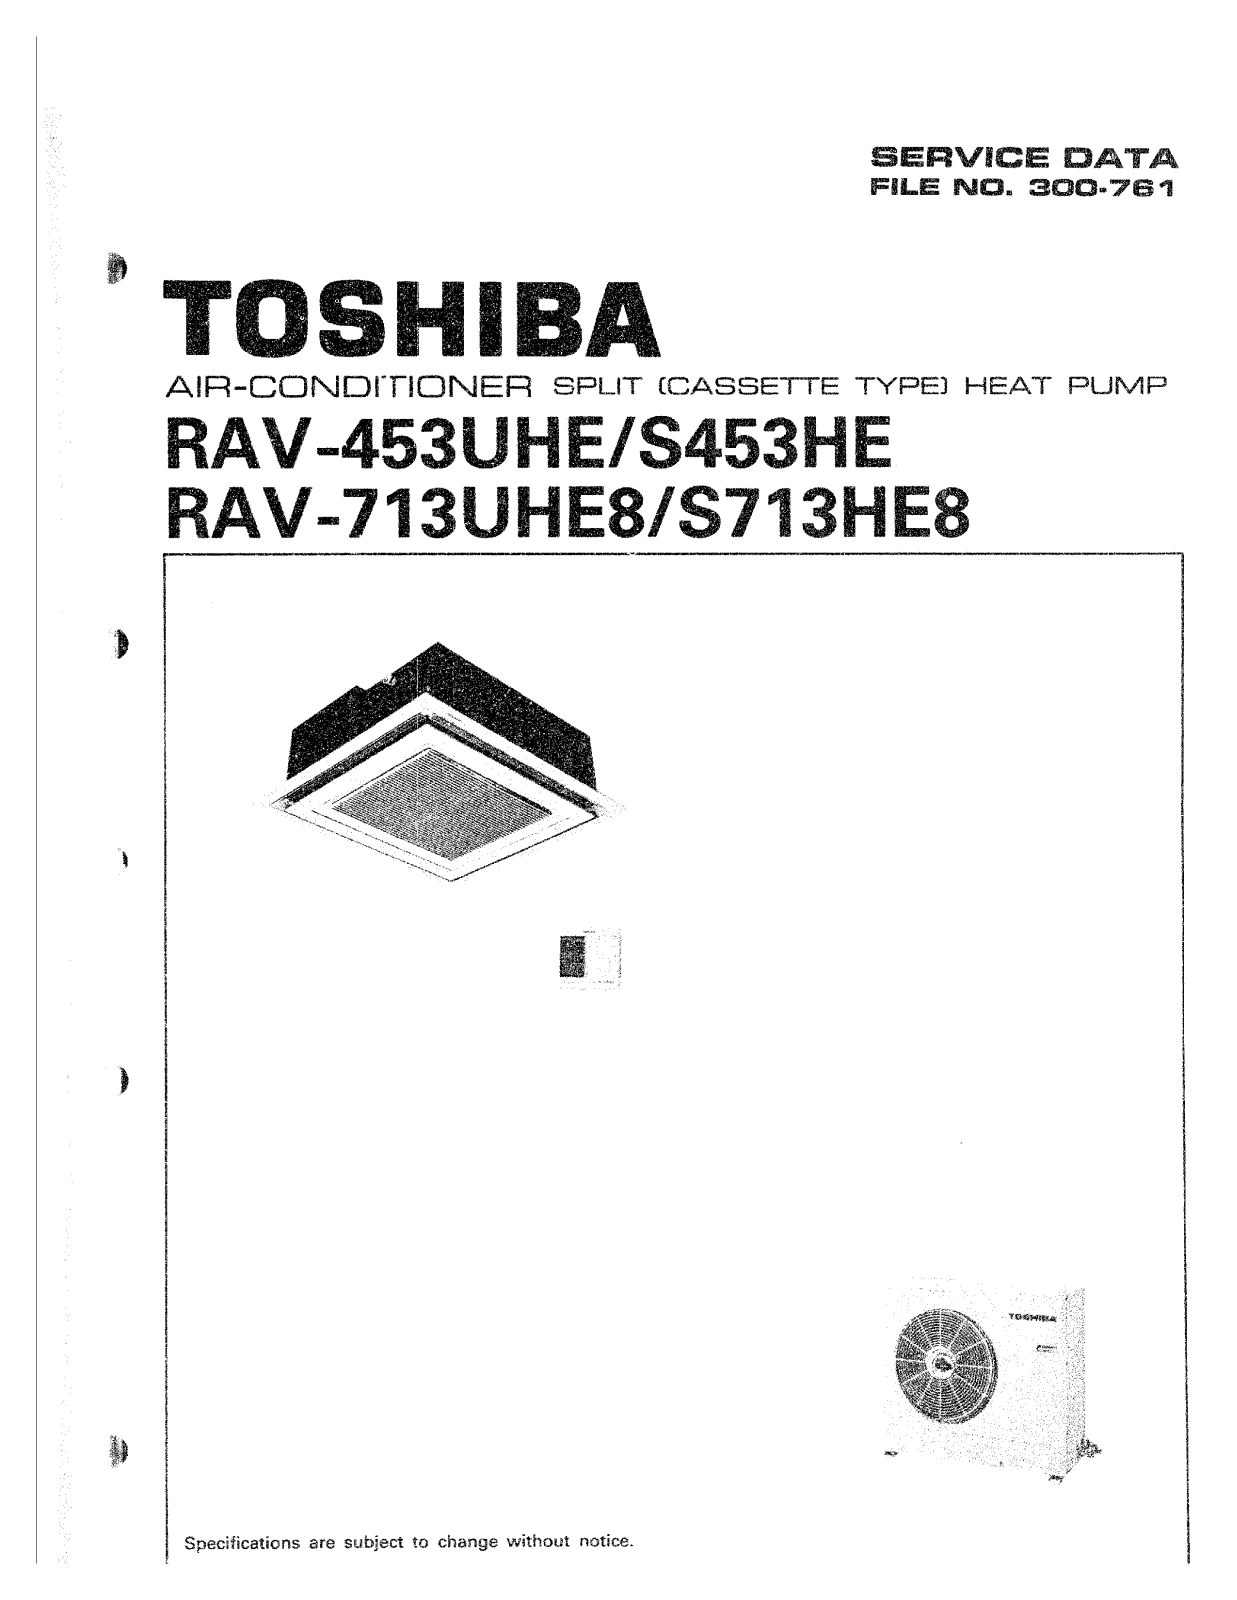 Toshiba RAV-453UHE, RAV-713UHE8 SERVICE MANUAL